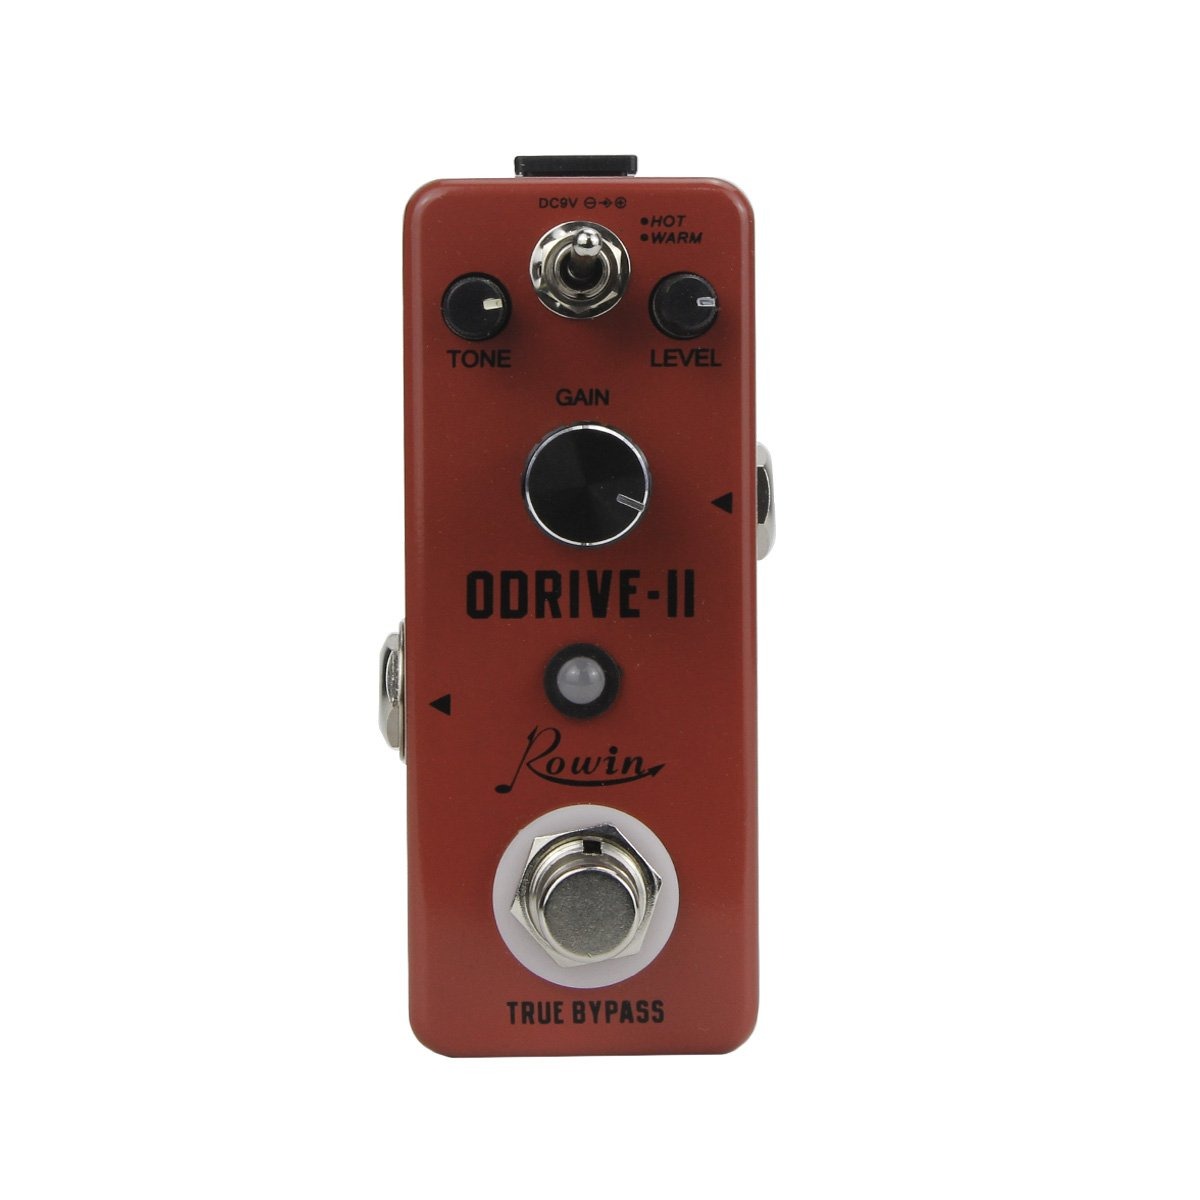 Rowin LEF-302B ODRIVE-II Mini Guitar Effect Overdrive Pedal | iknmusic